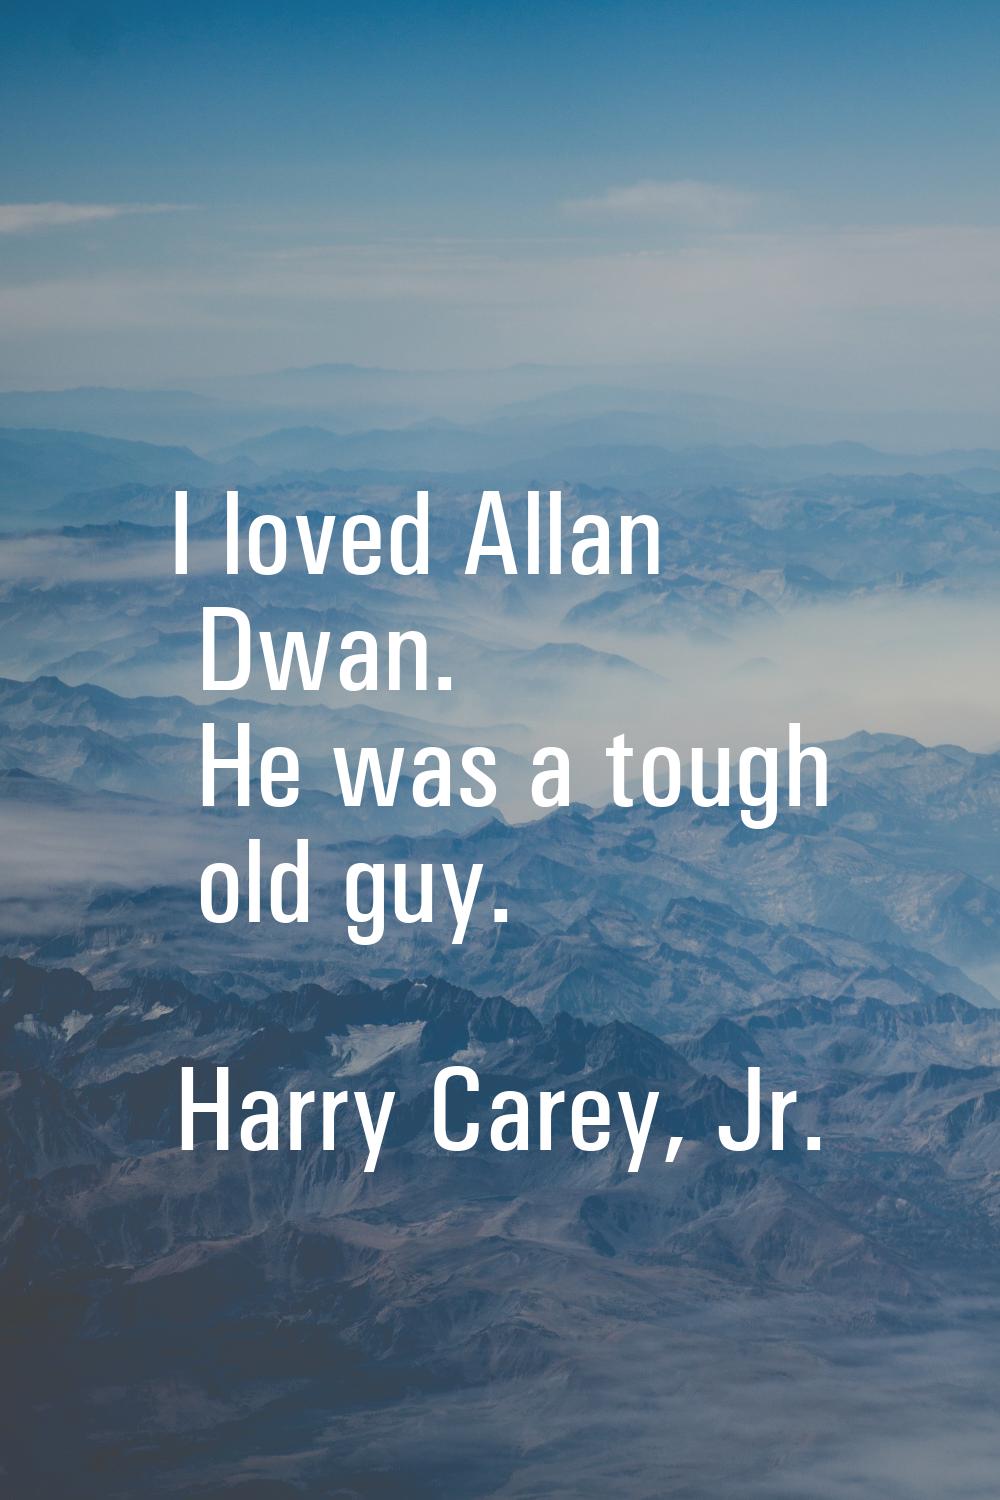 I loved Allan Dwan. He was a tough old guy.